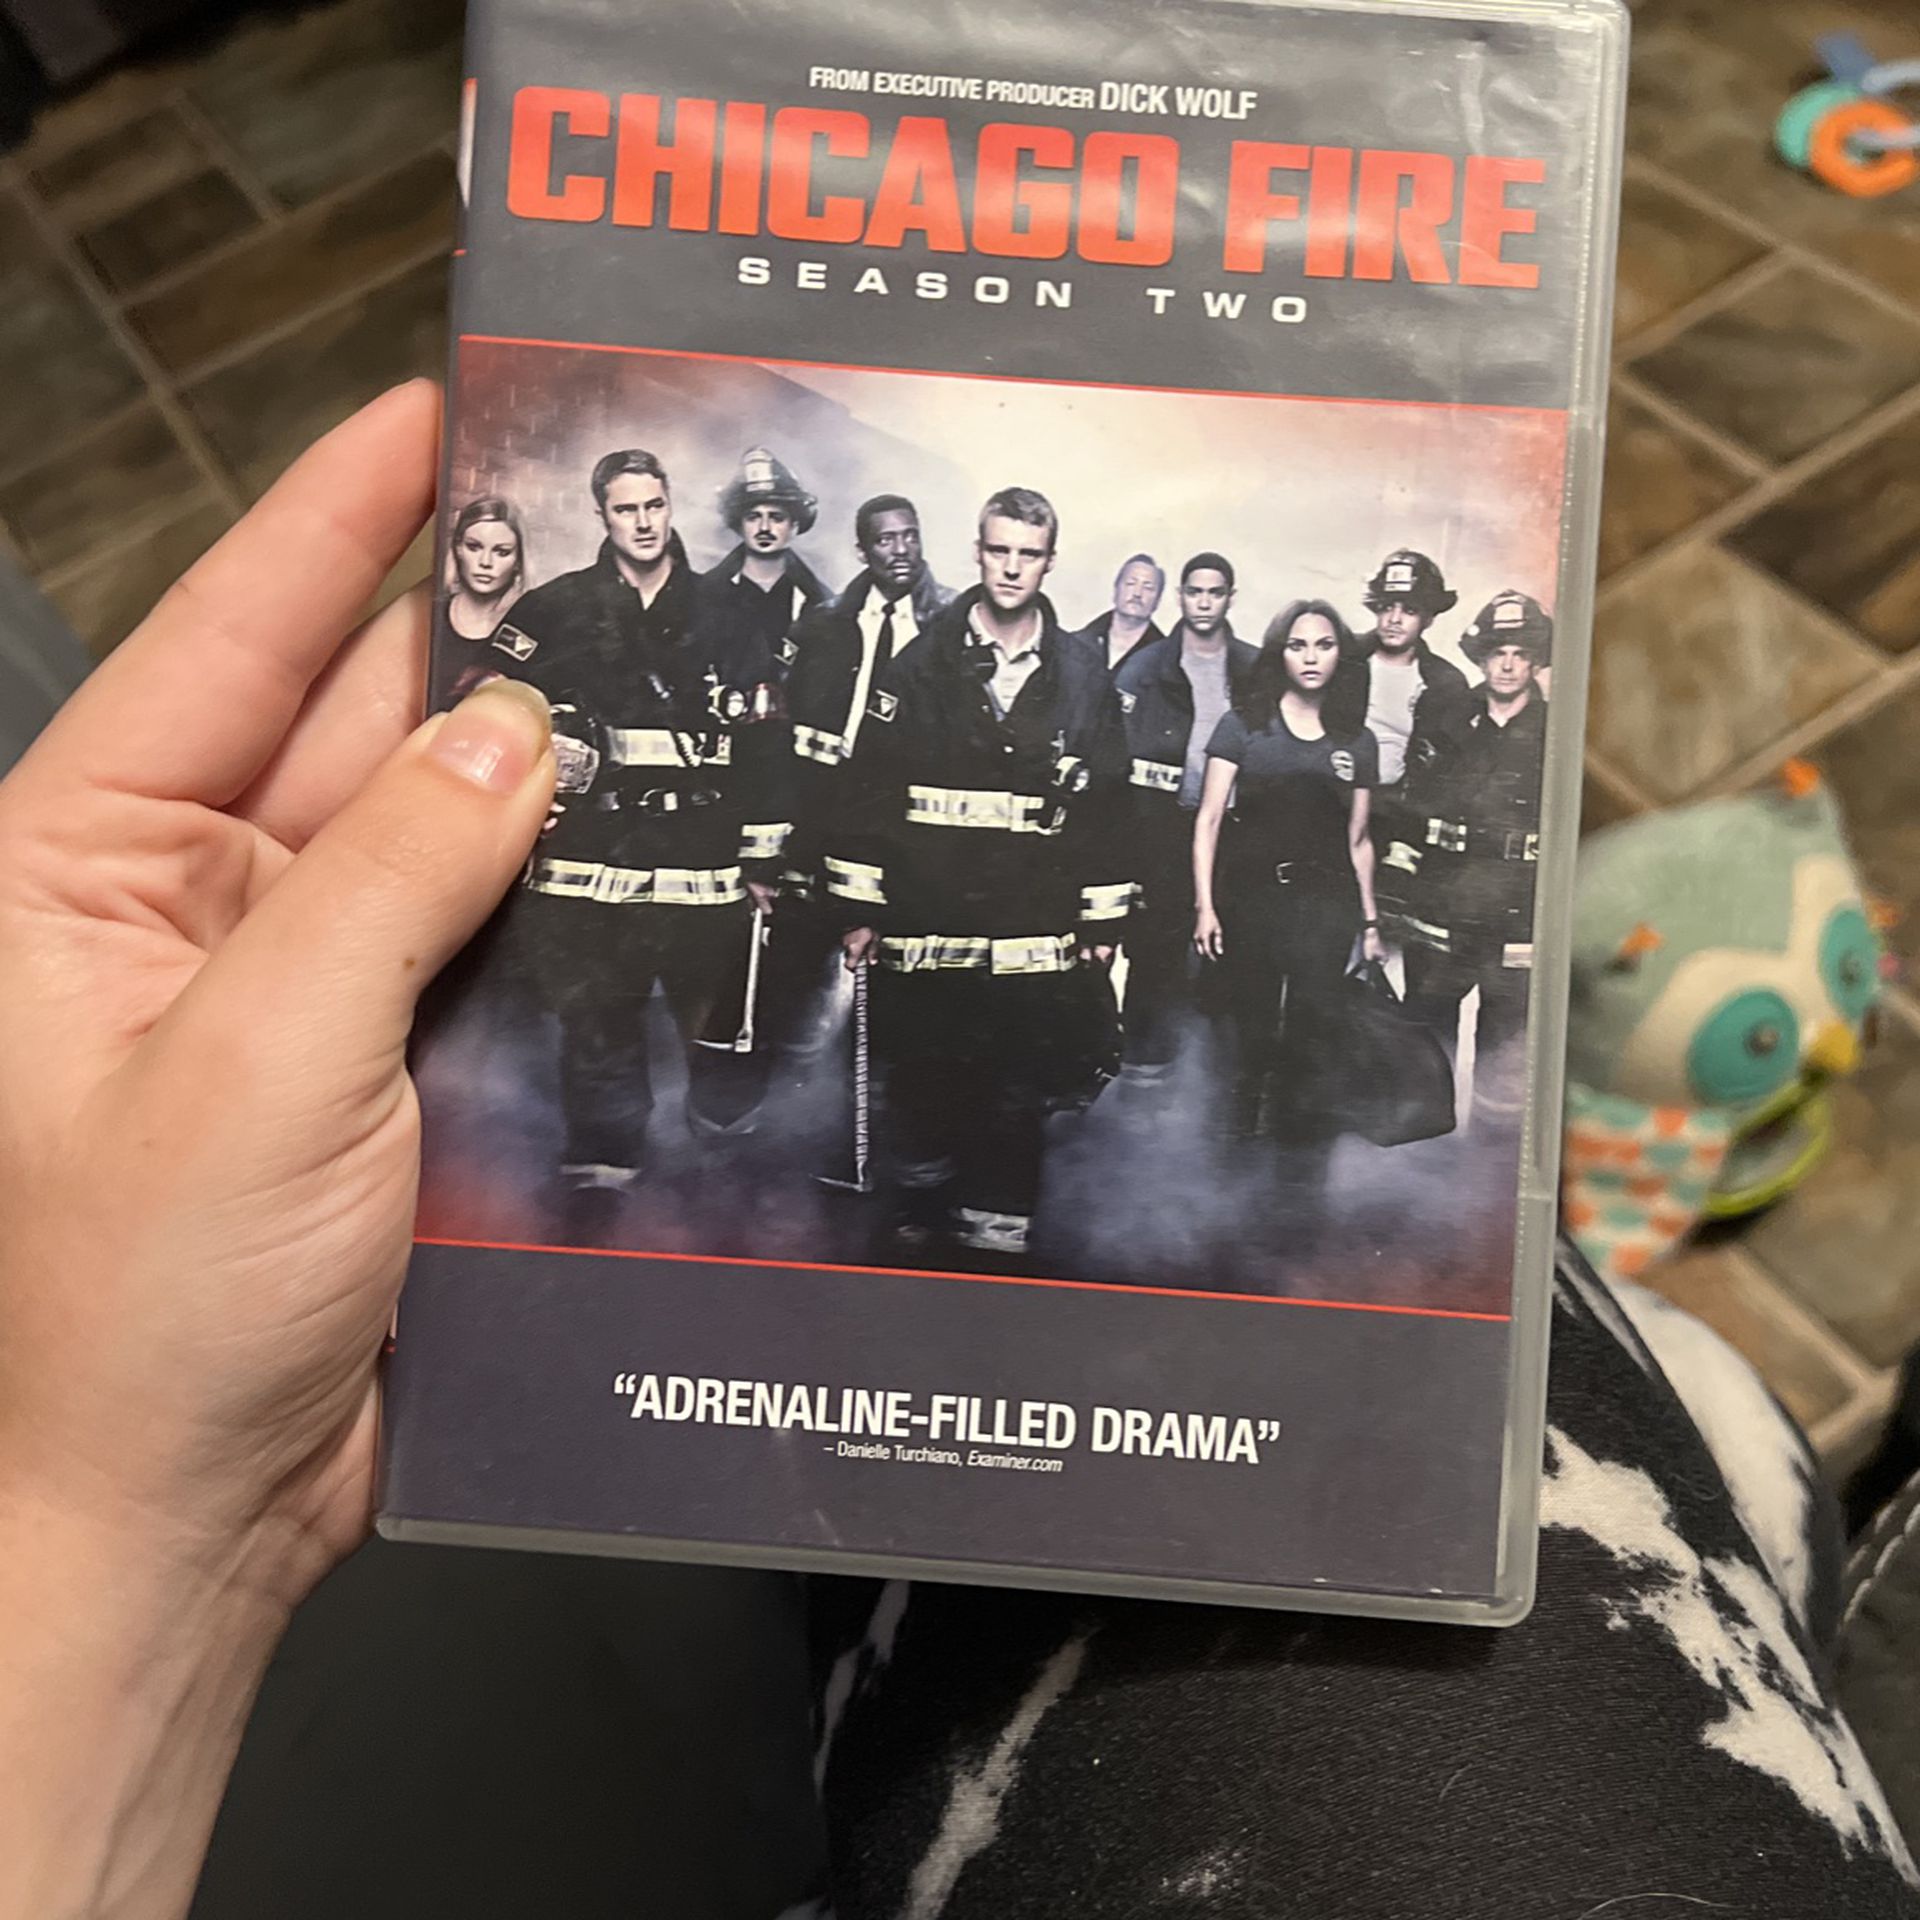 Chicago fire season 2